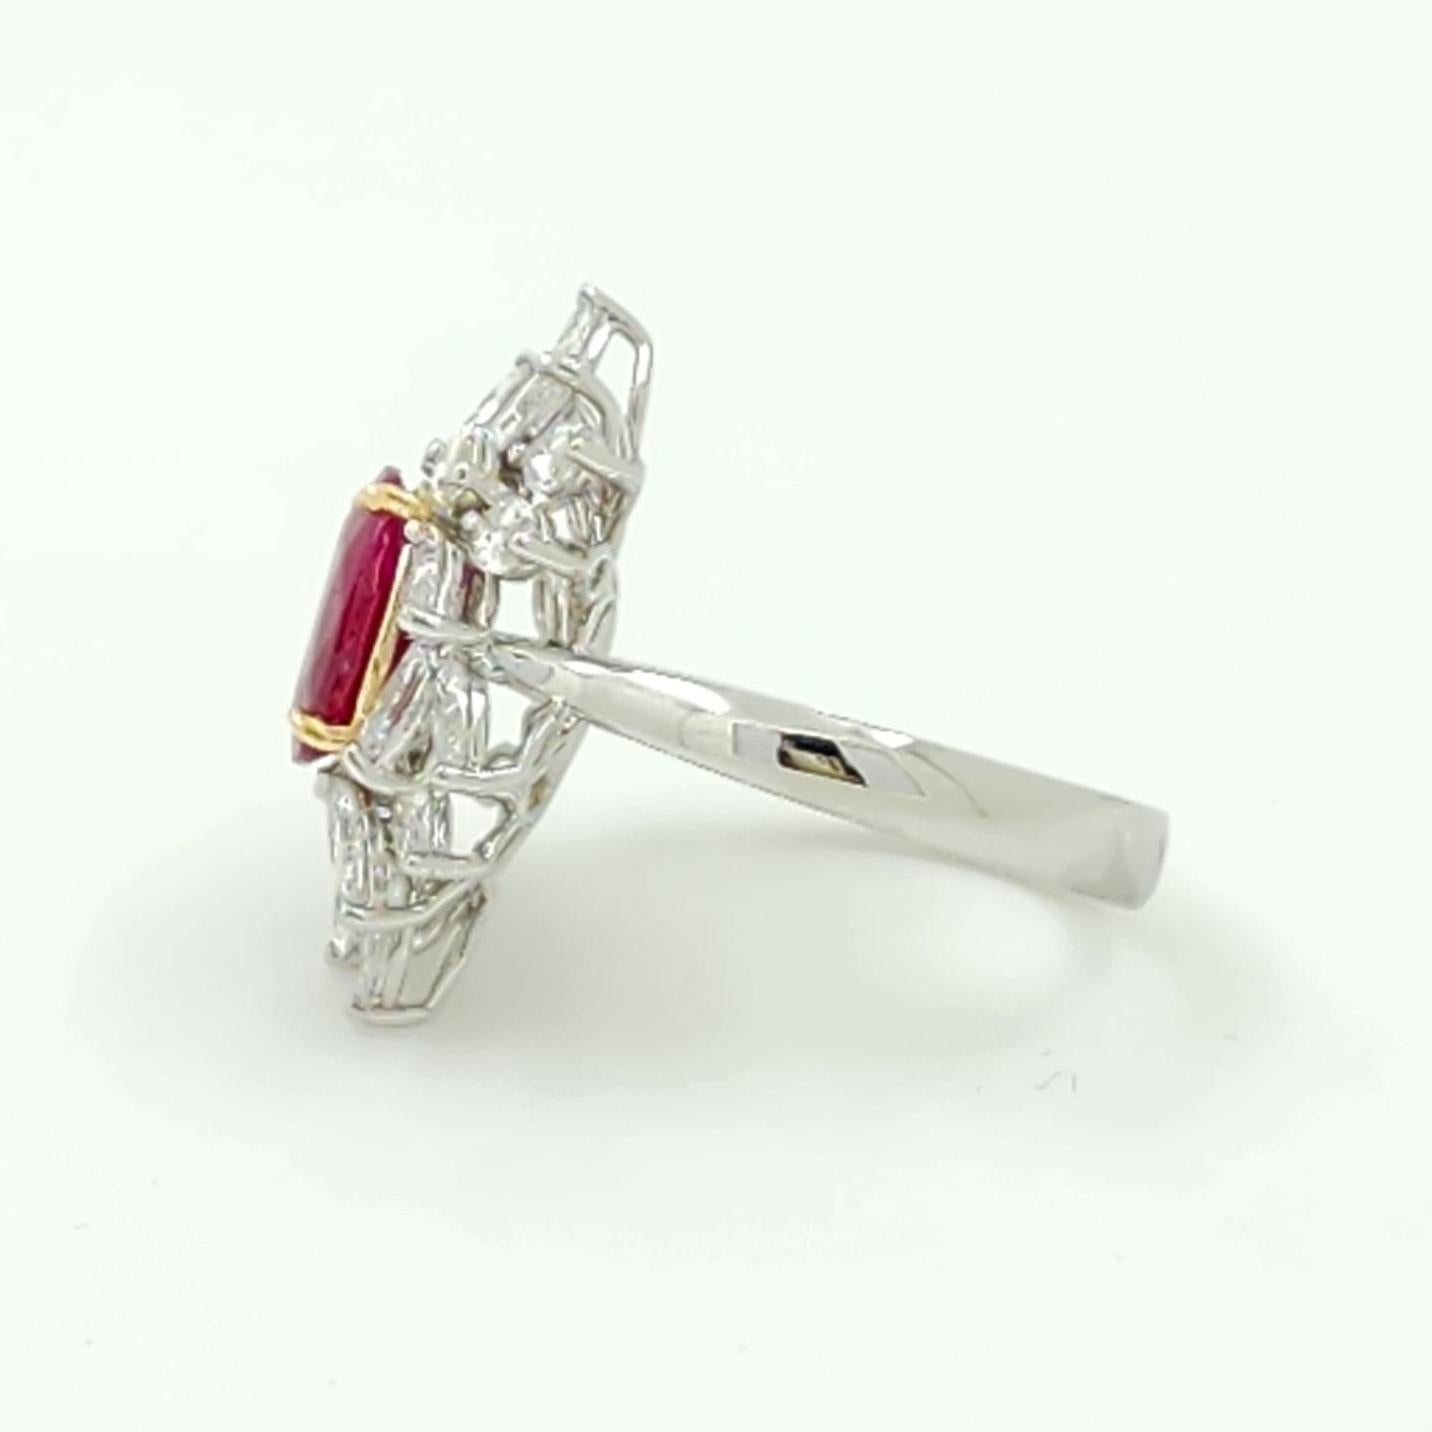 Oval Cut GIA Certified 2.11 Carat Burma Ruby Diamond Ring in 18 Karat White Gold For Sale